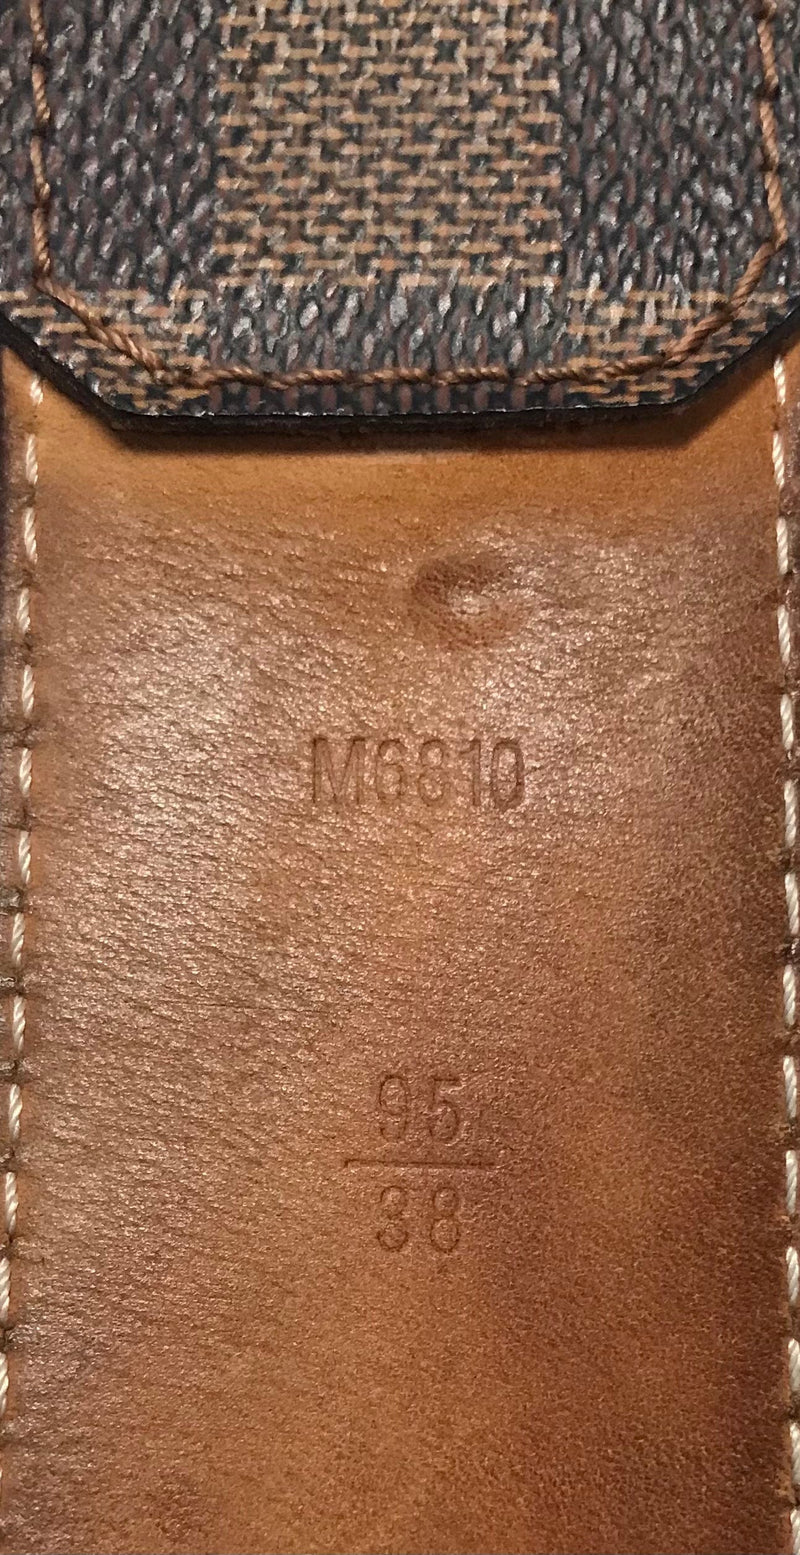 Cinto Louis Vuitton original Neo Inventeur marrom masculino